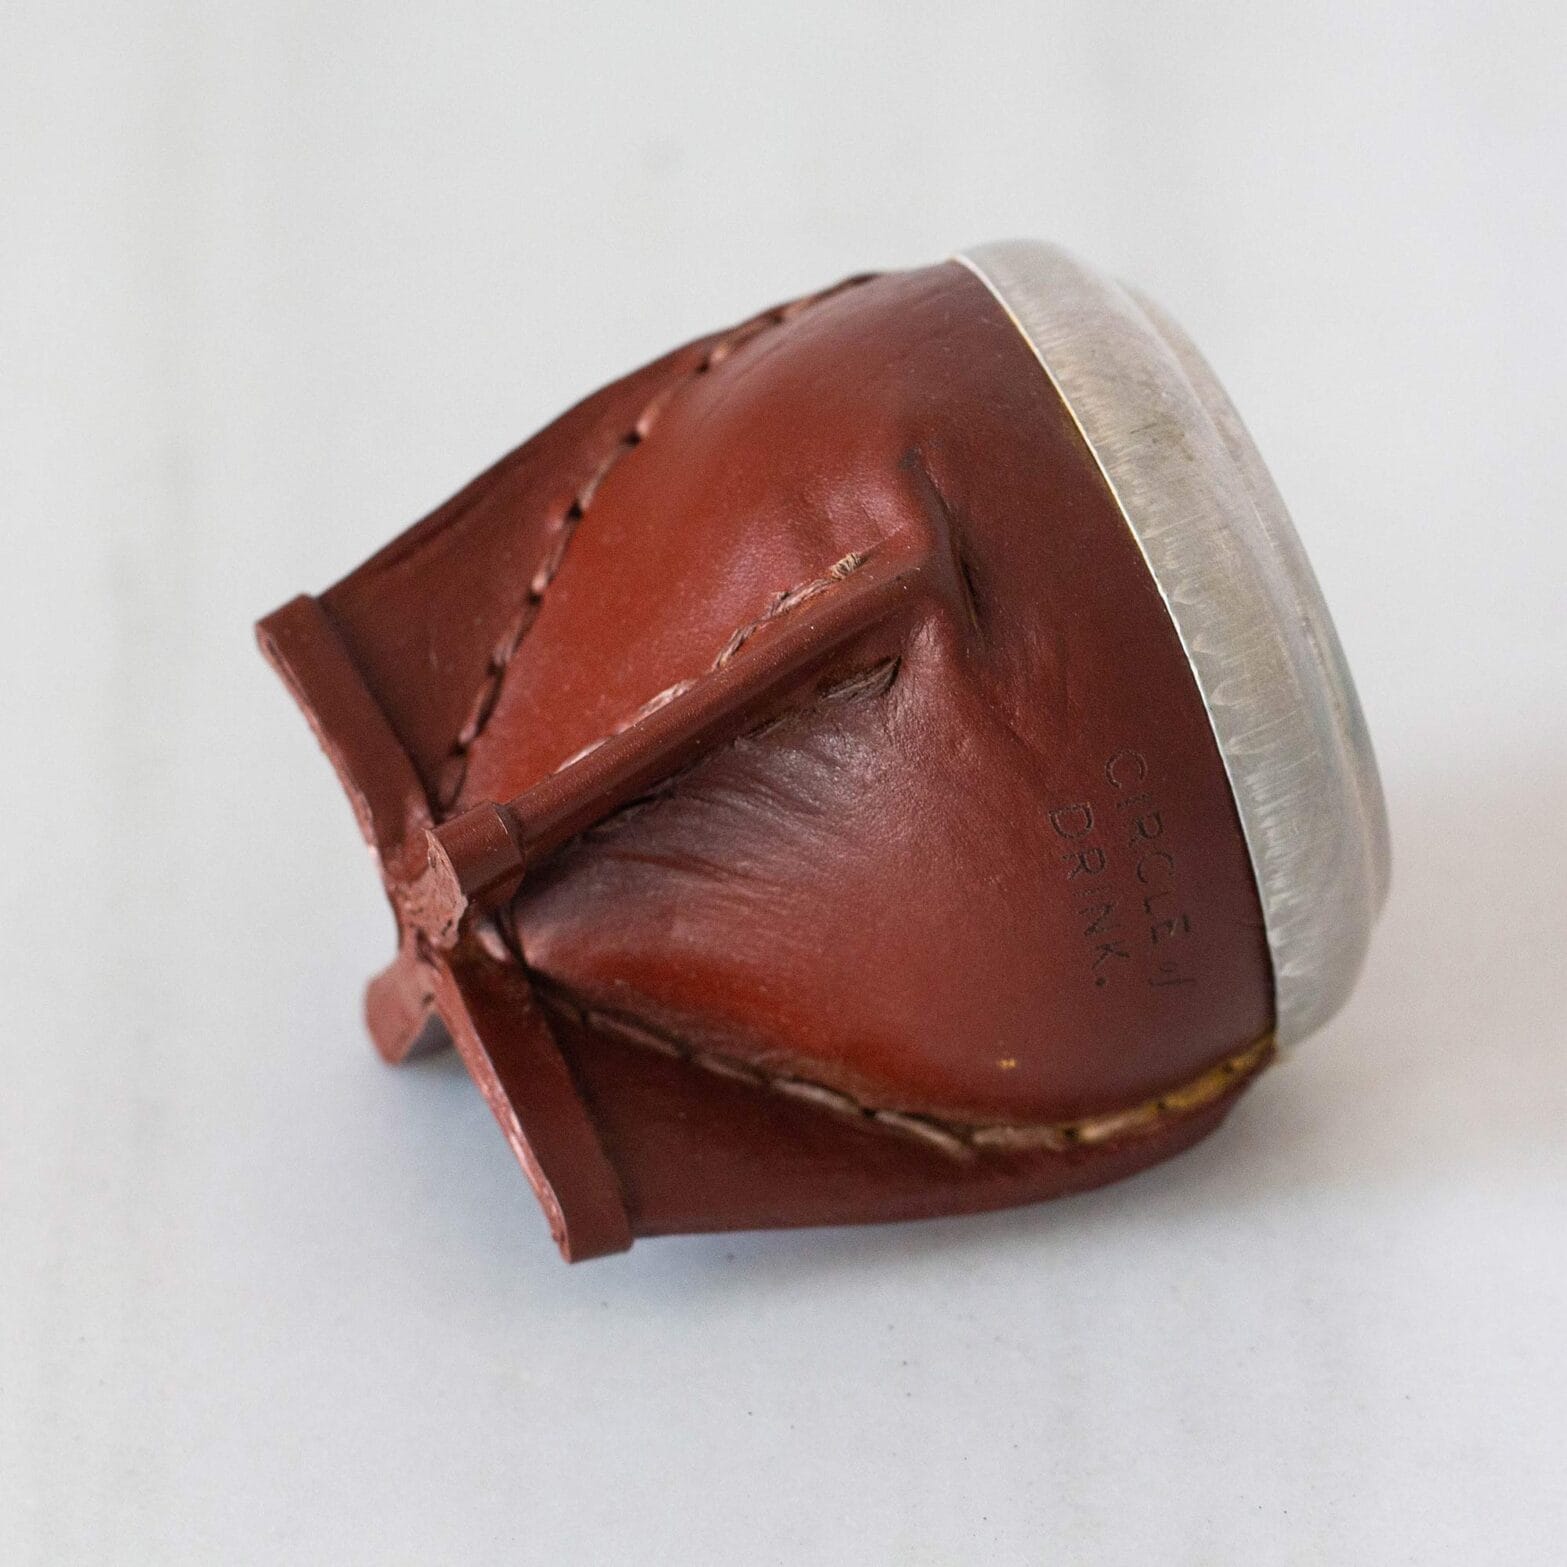 Majito Cup Rojo - Handmade Brazilian Cuia - Burgundy Wrapped Leather - 25g capacity